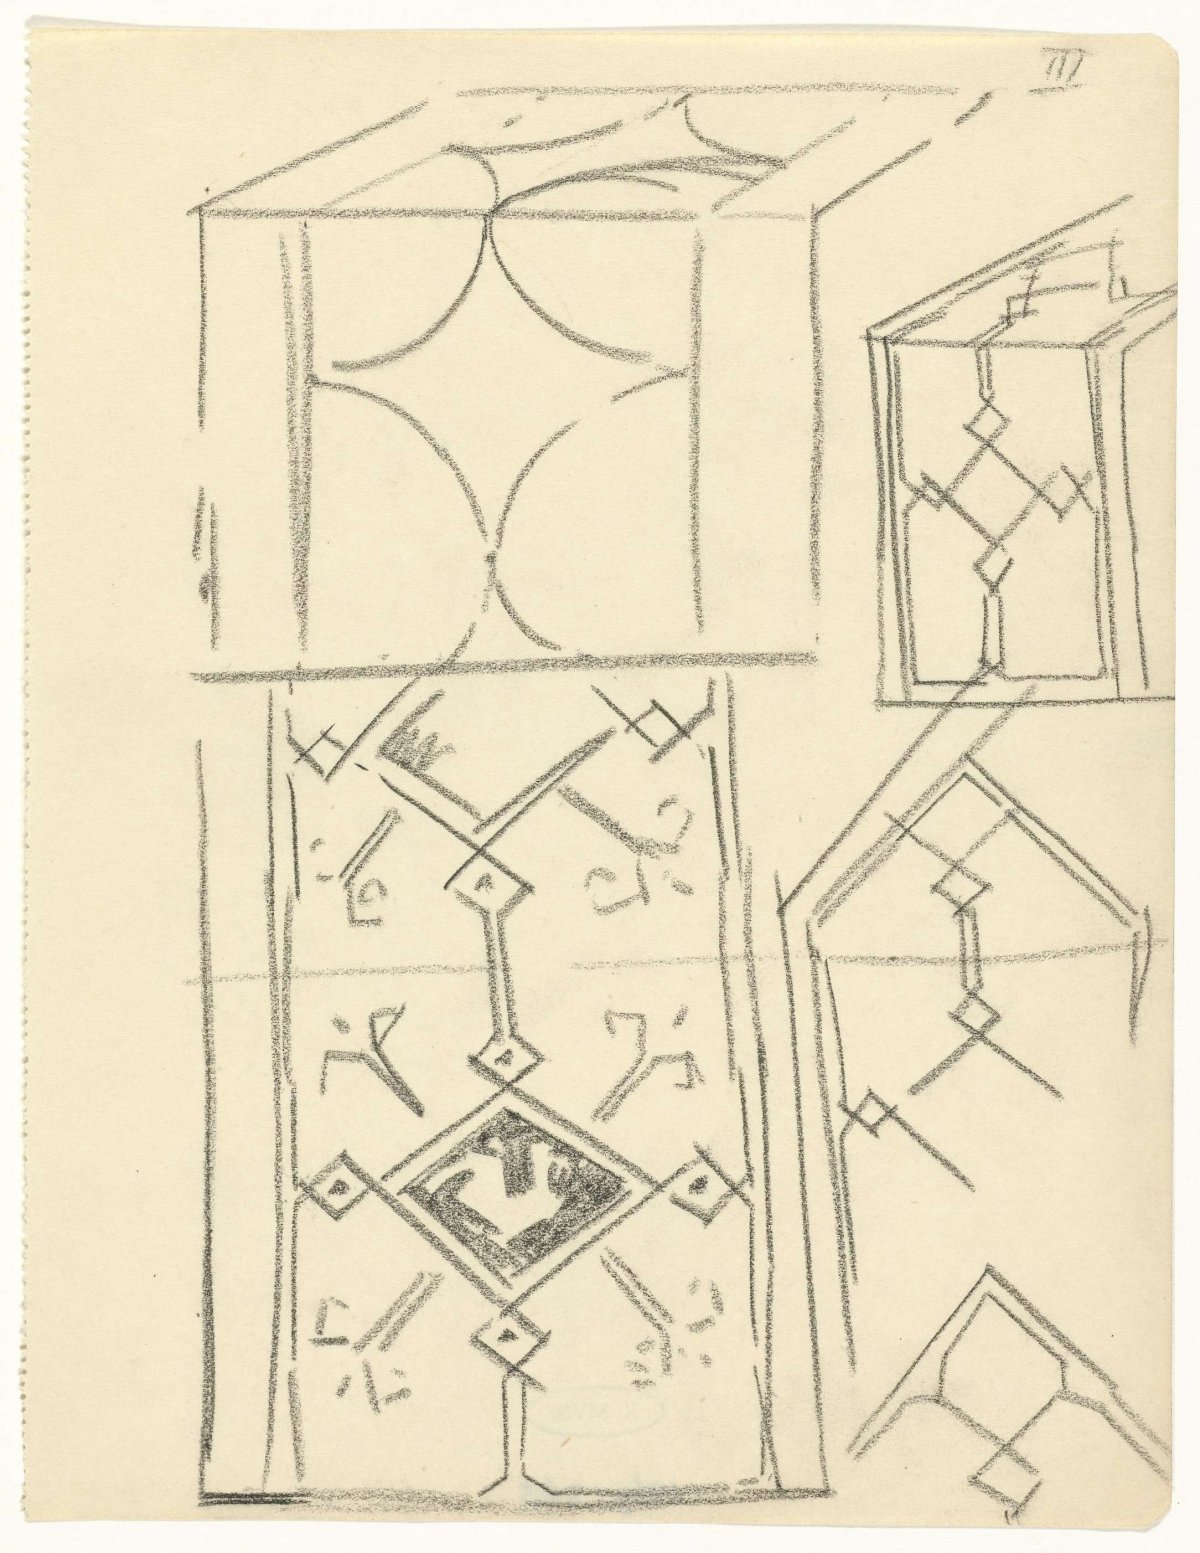 Ornament designs on blocks, Gerrit Willem Dijsselhof, 1876 - 1924